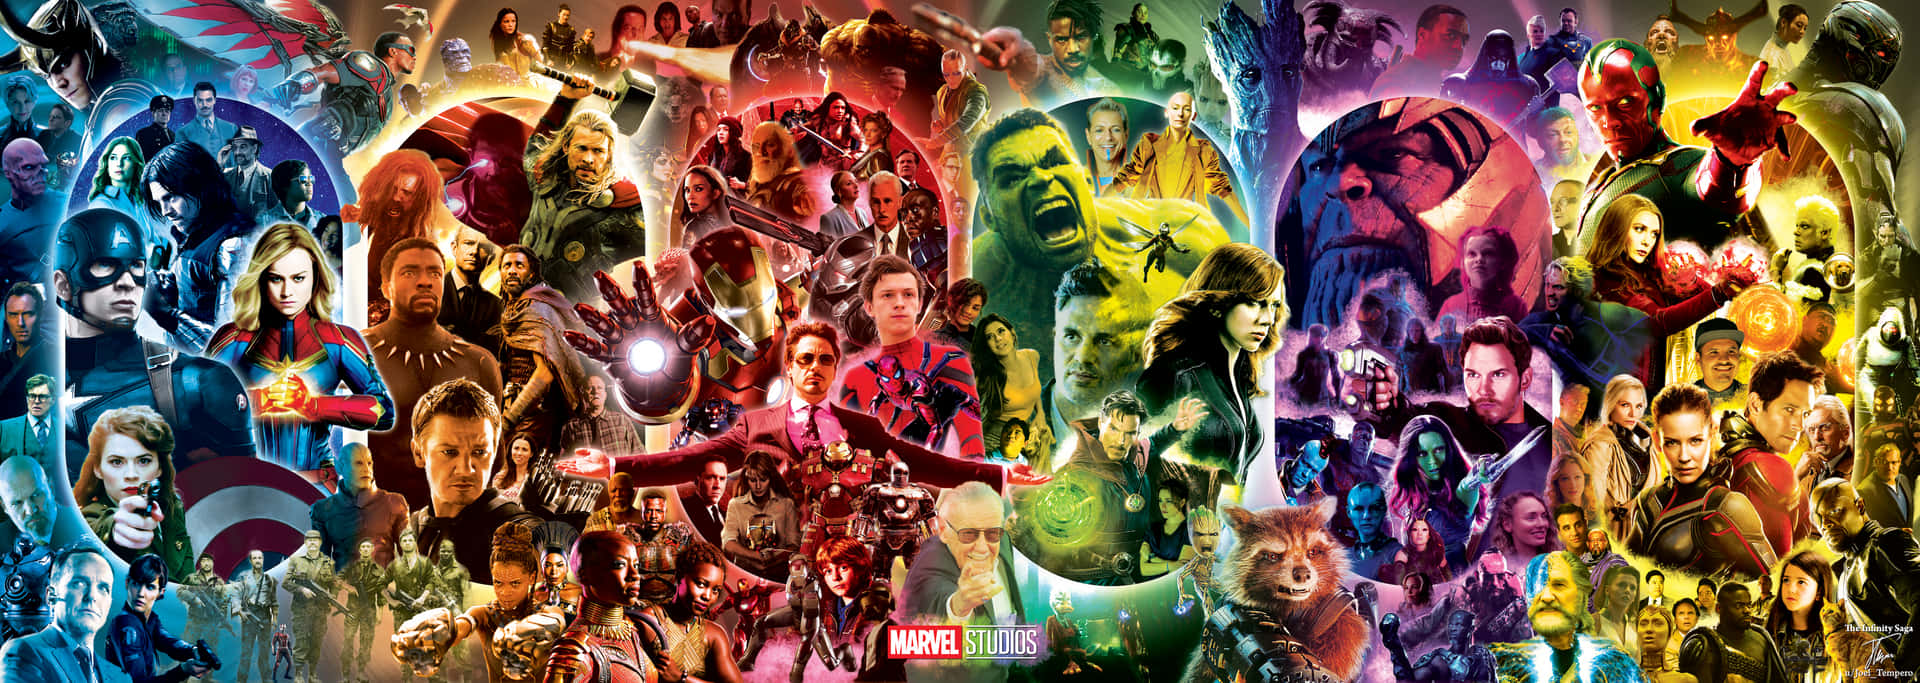 Dieunglaublichen Avengers Vereinen Sich. Wallpaper